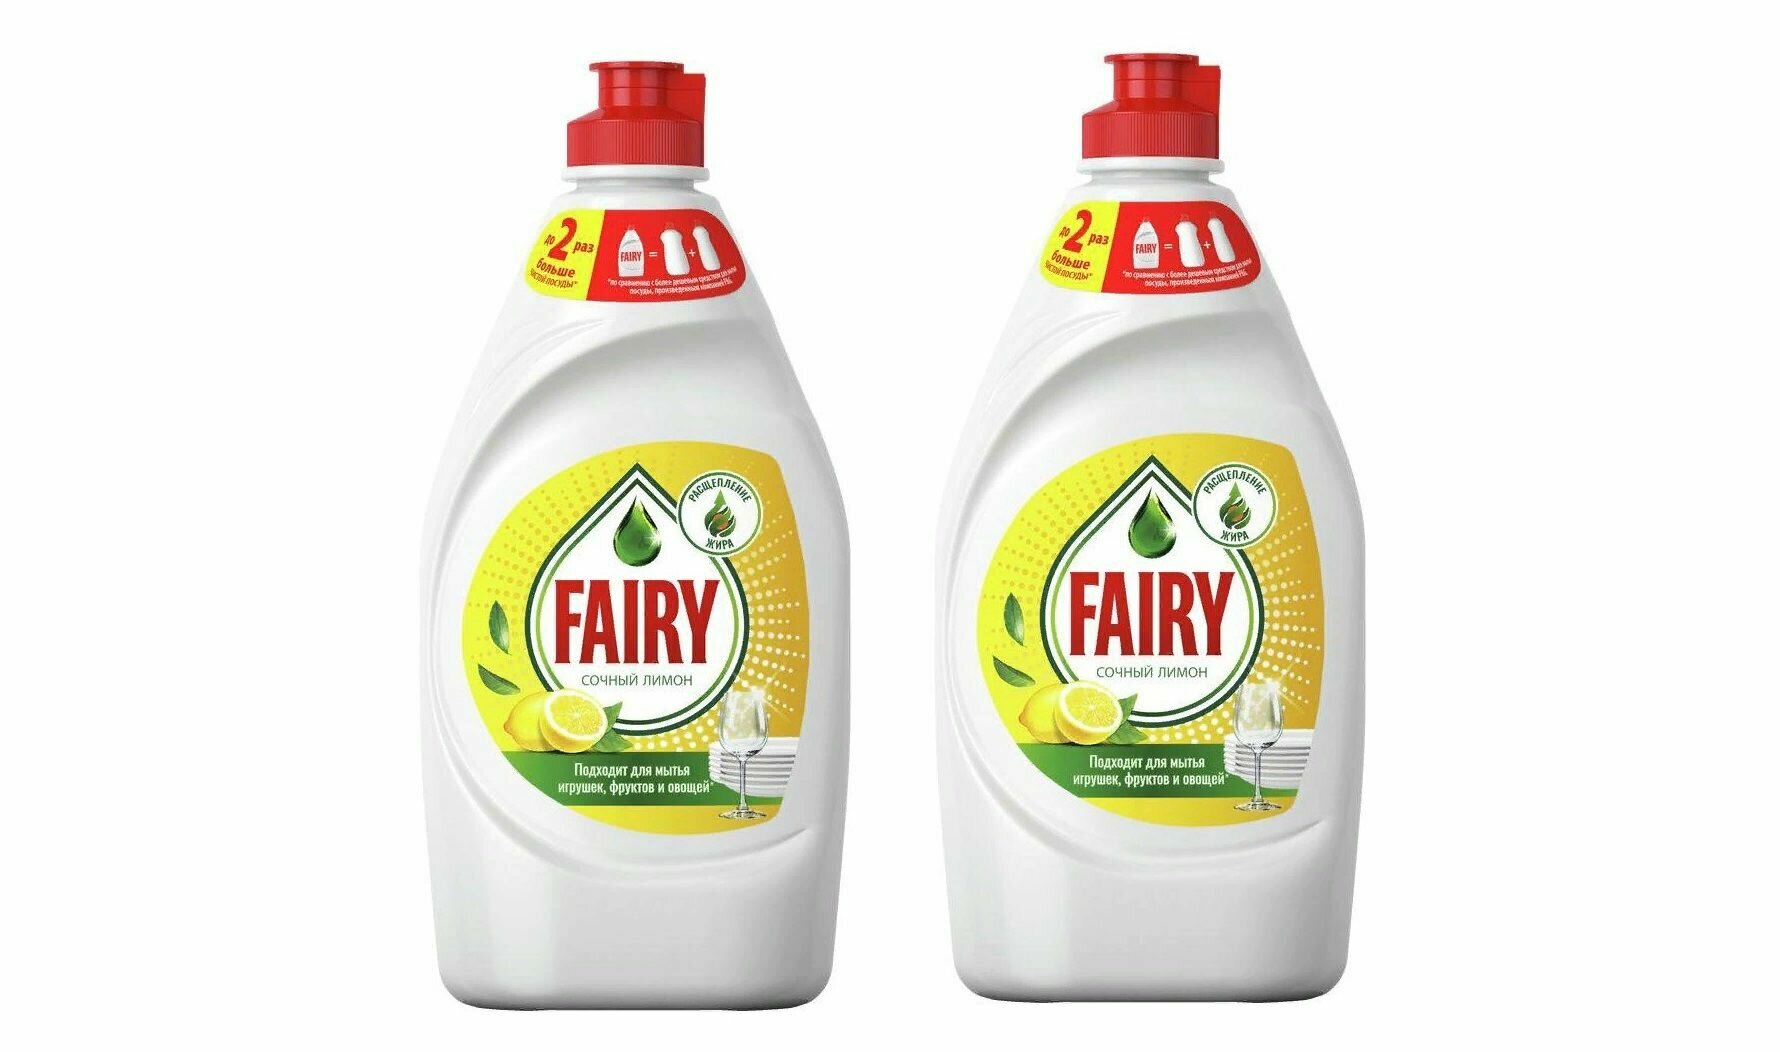 Fairy Средство для мытья посуды Oxi, Сочный лимон, 450 мл, 2 штуки